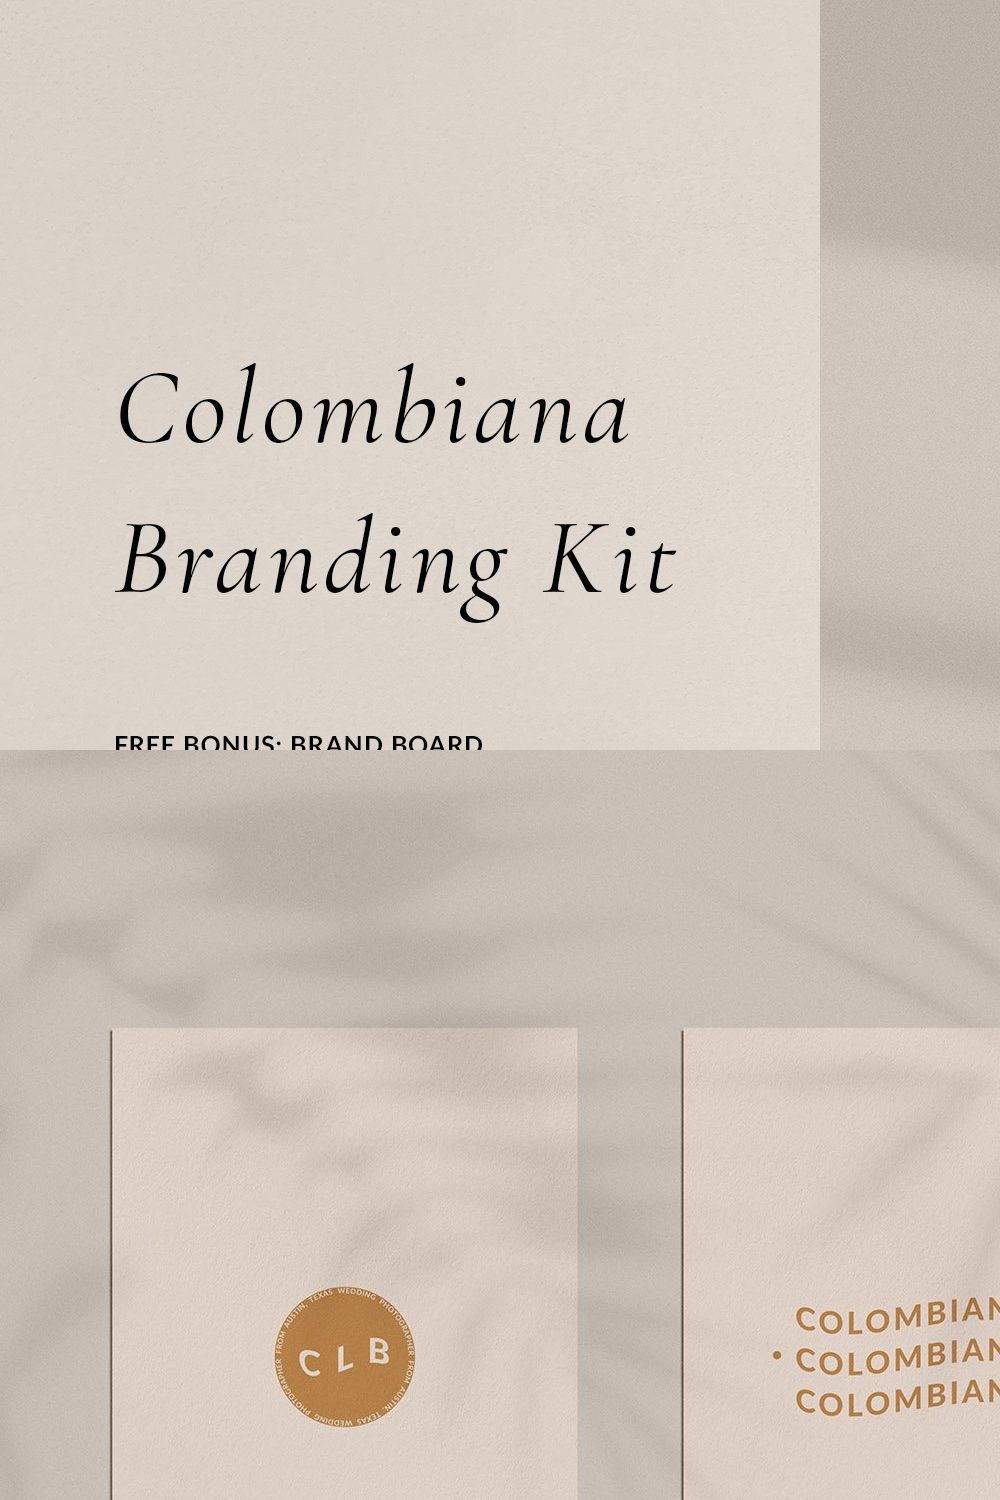 Colombiana Branding Kit pinterest preview image.